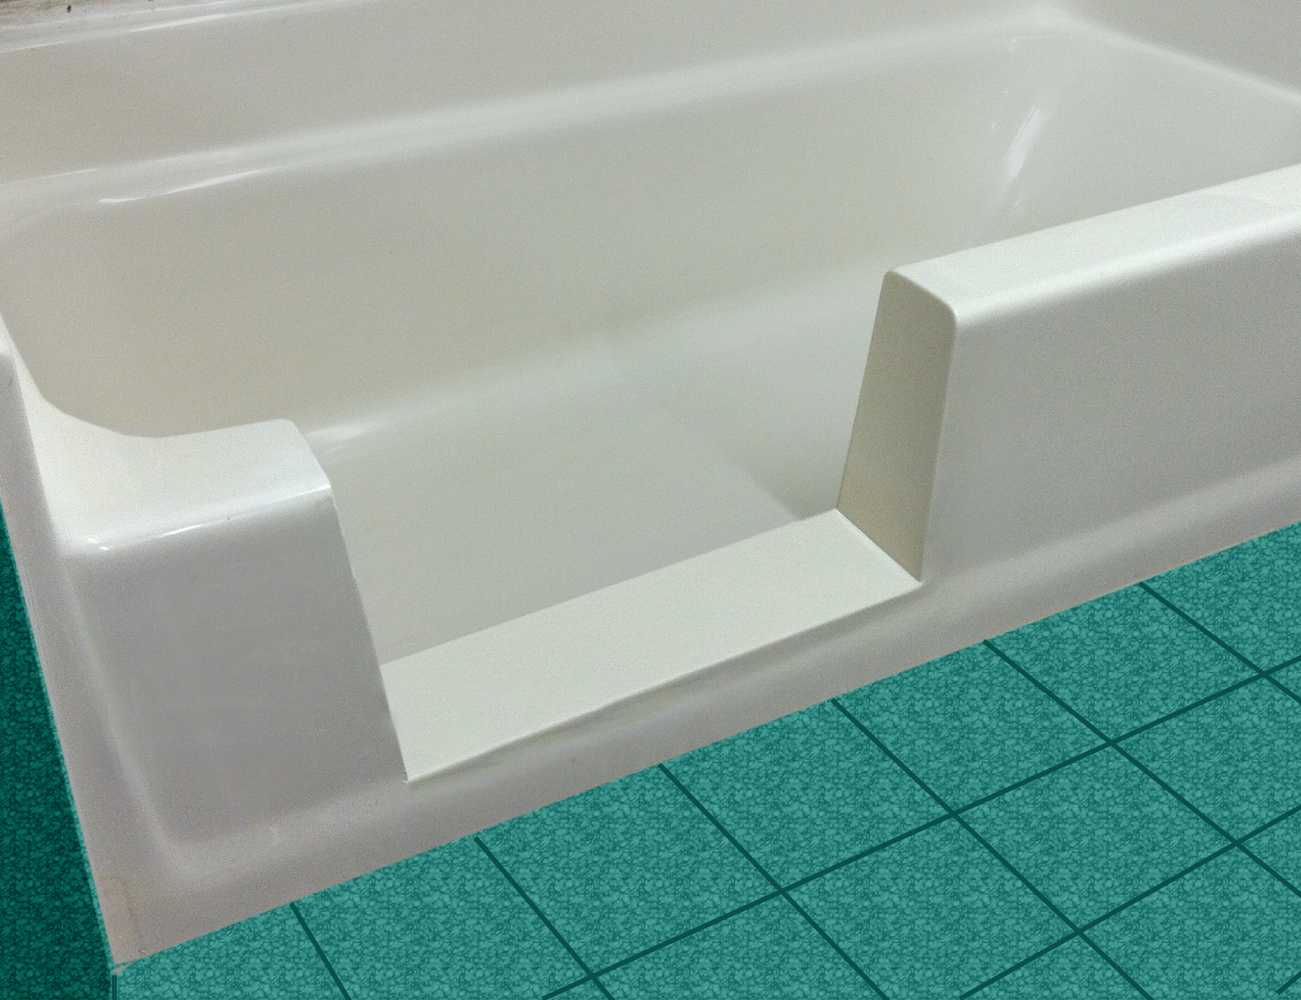 Adaptive Access to create barrier-free bathtub